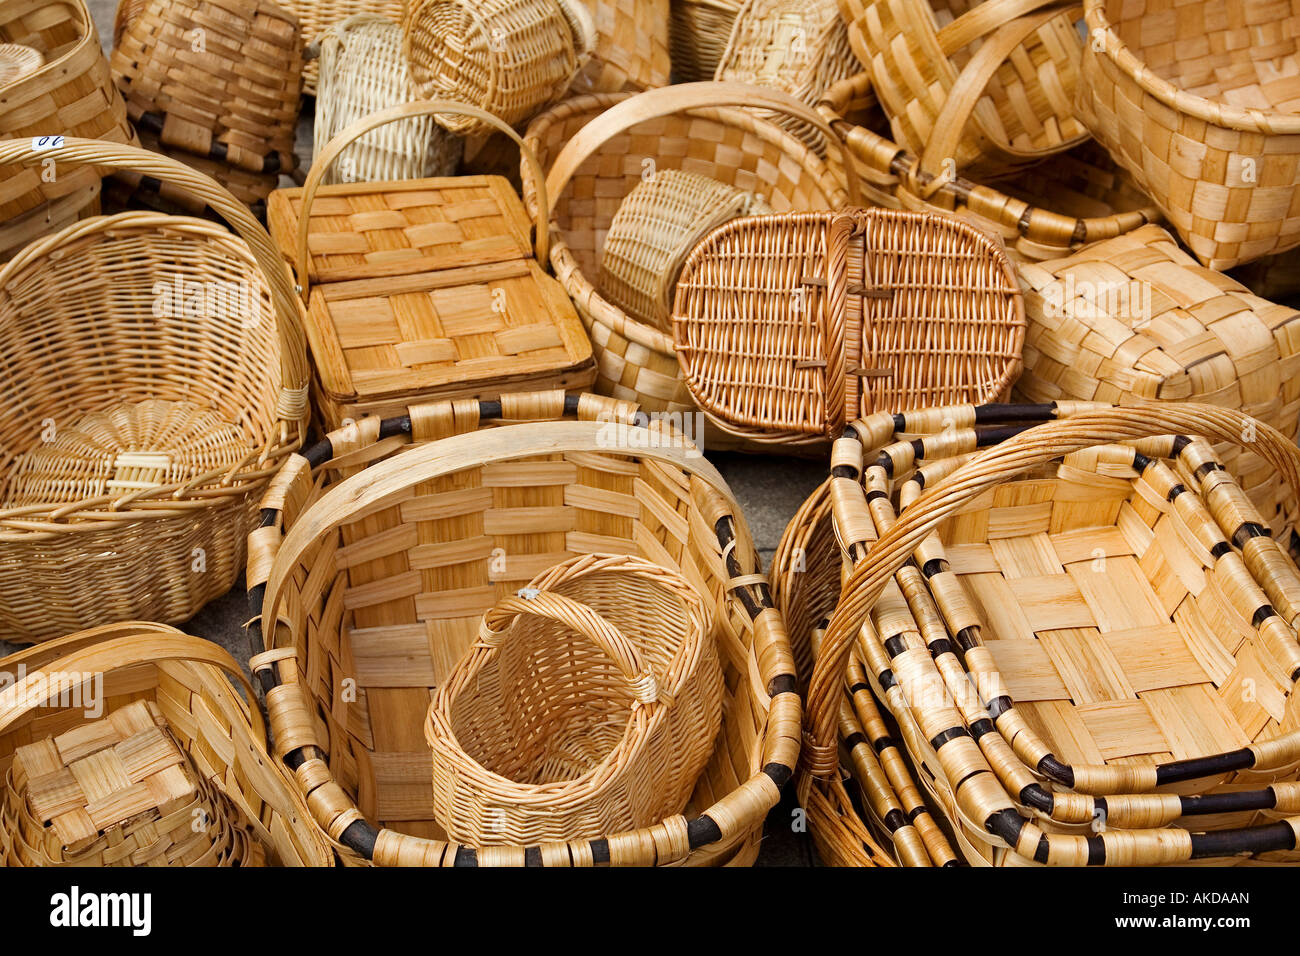 craft baskets burgos castilla leon spain Stock Photo - Alamy